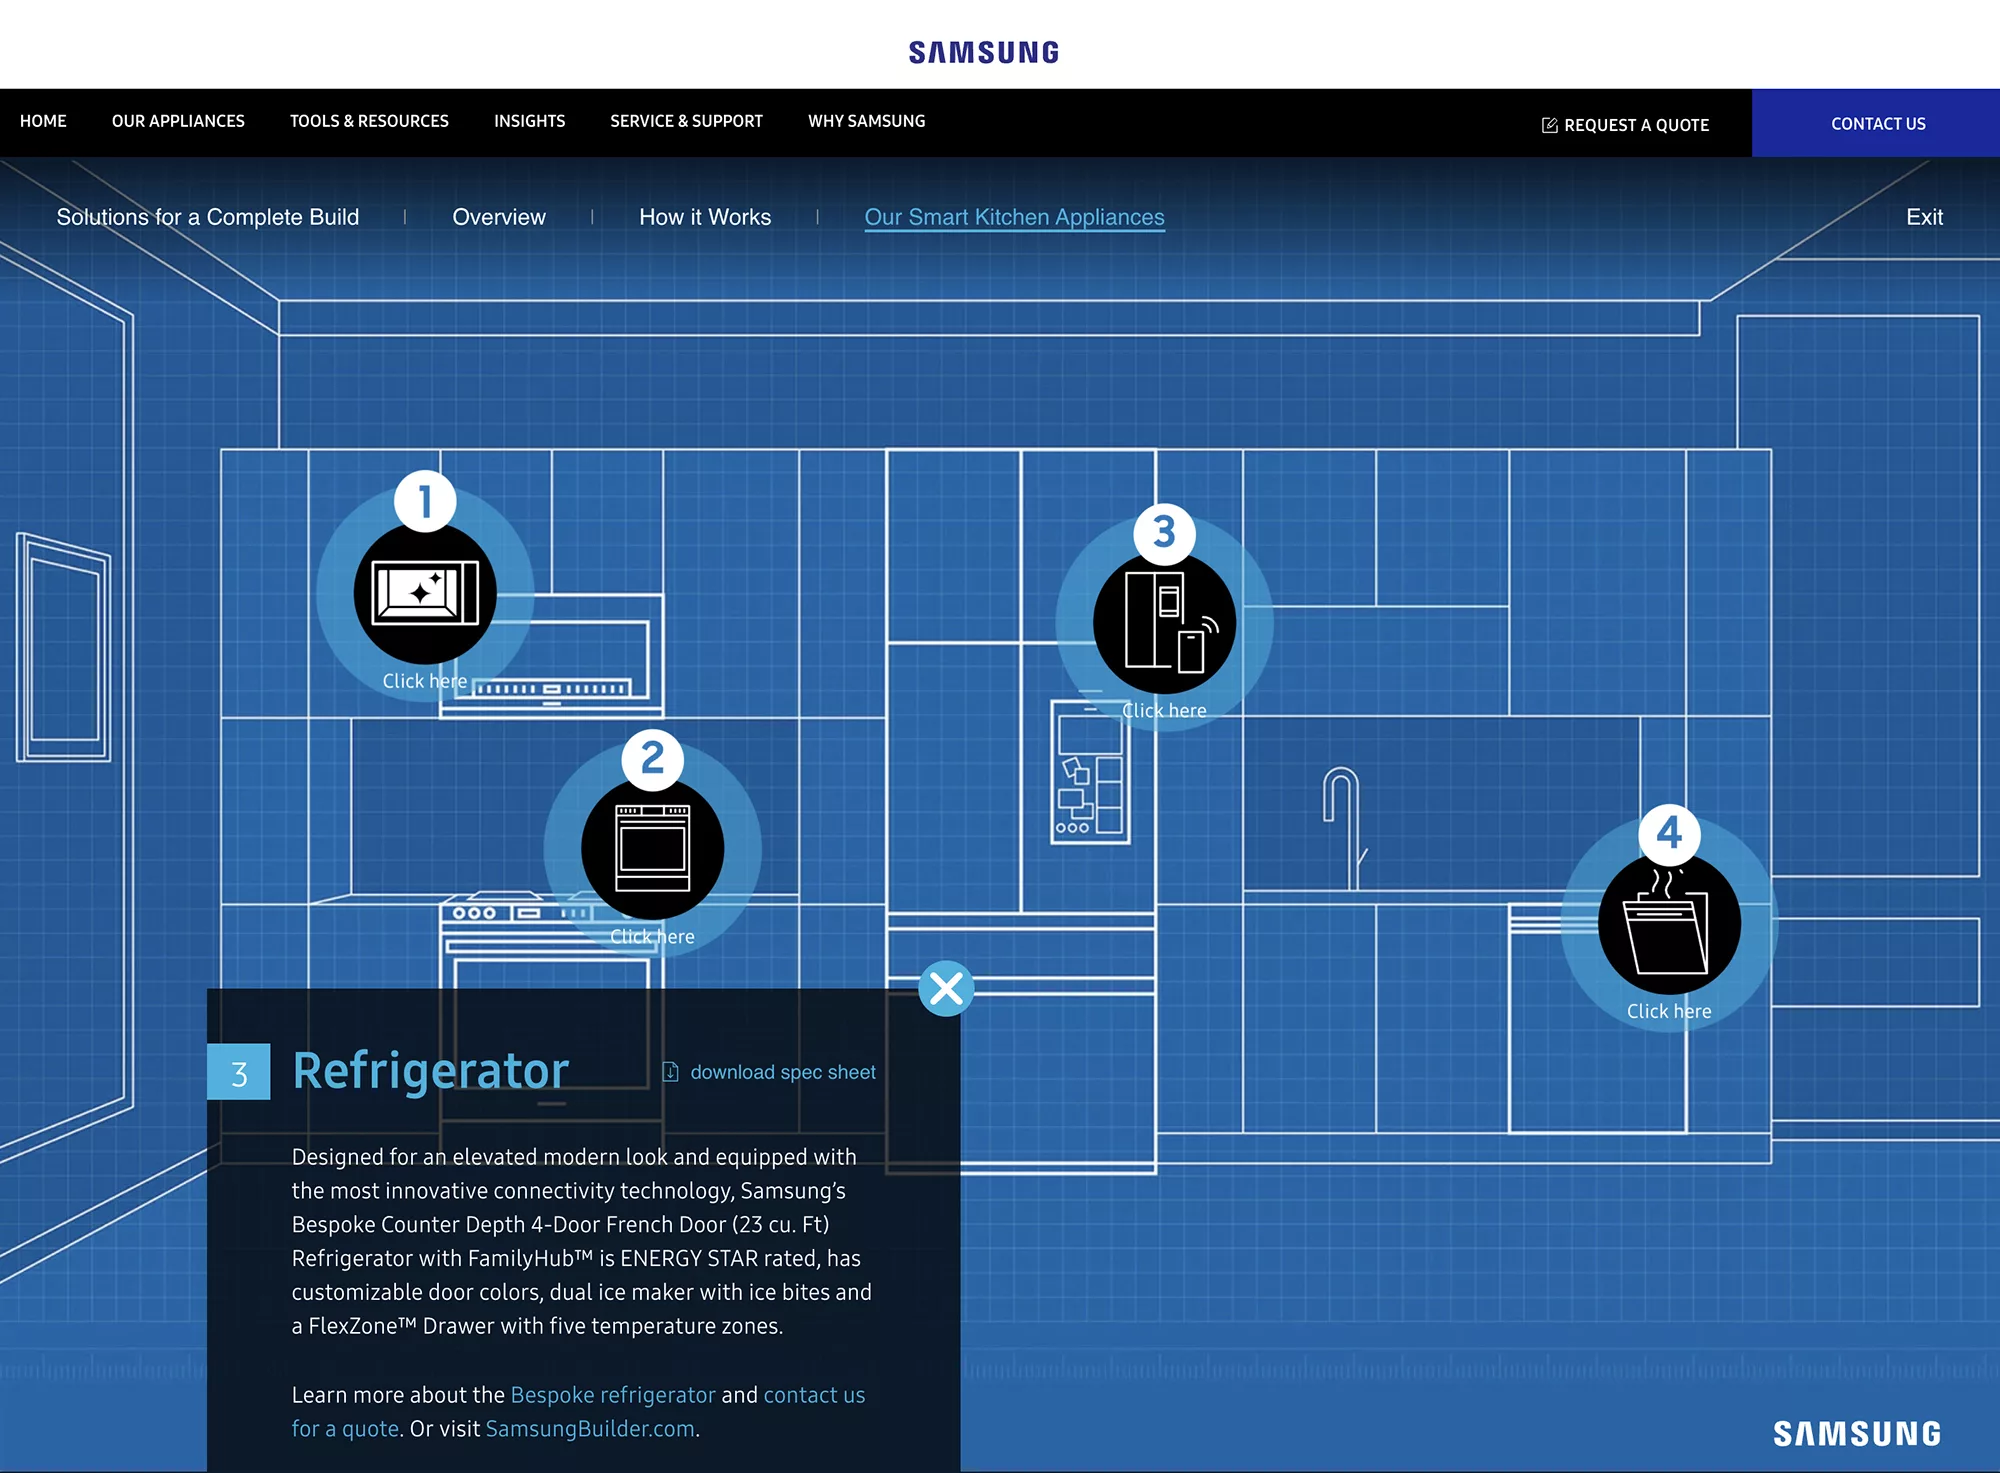 Samsung Appliances Interactive Guide